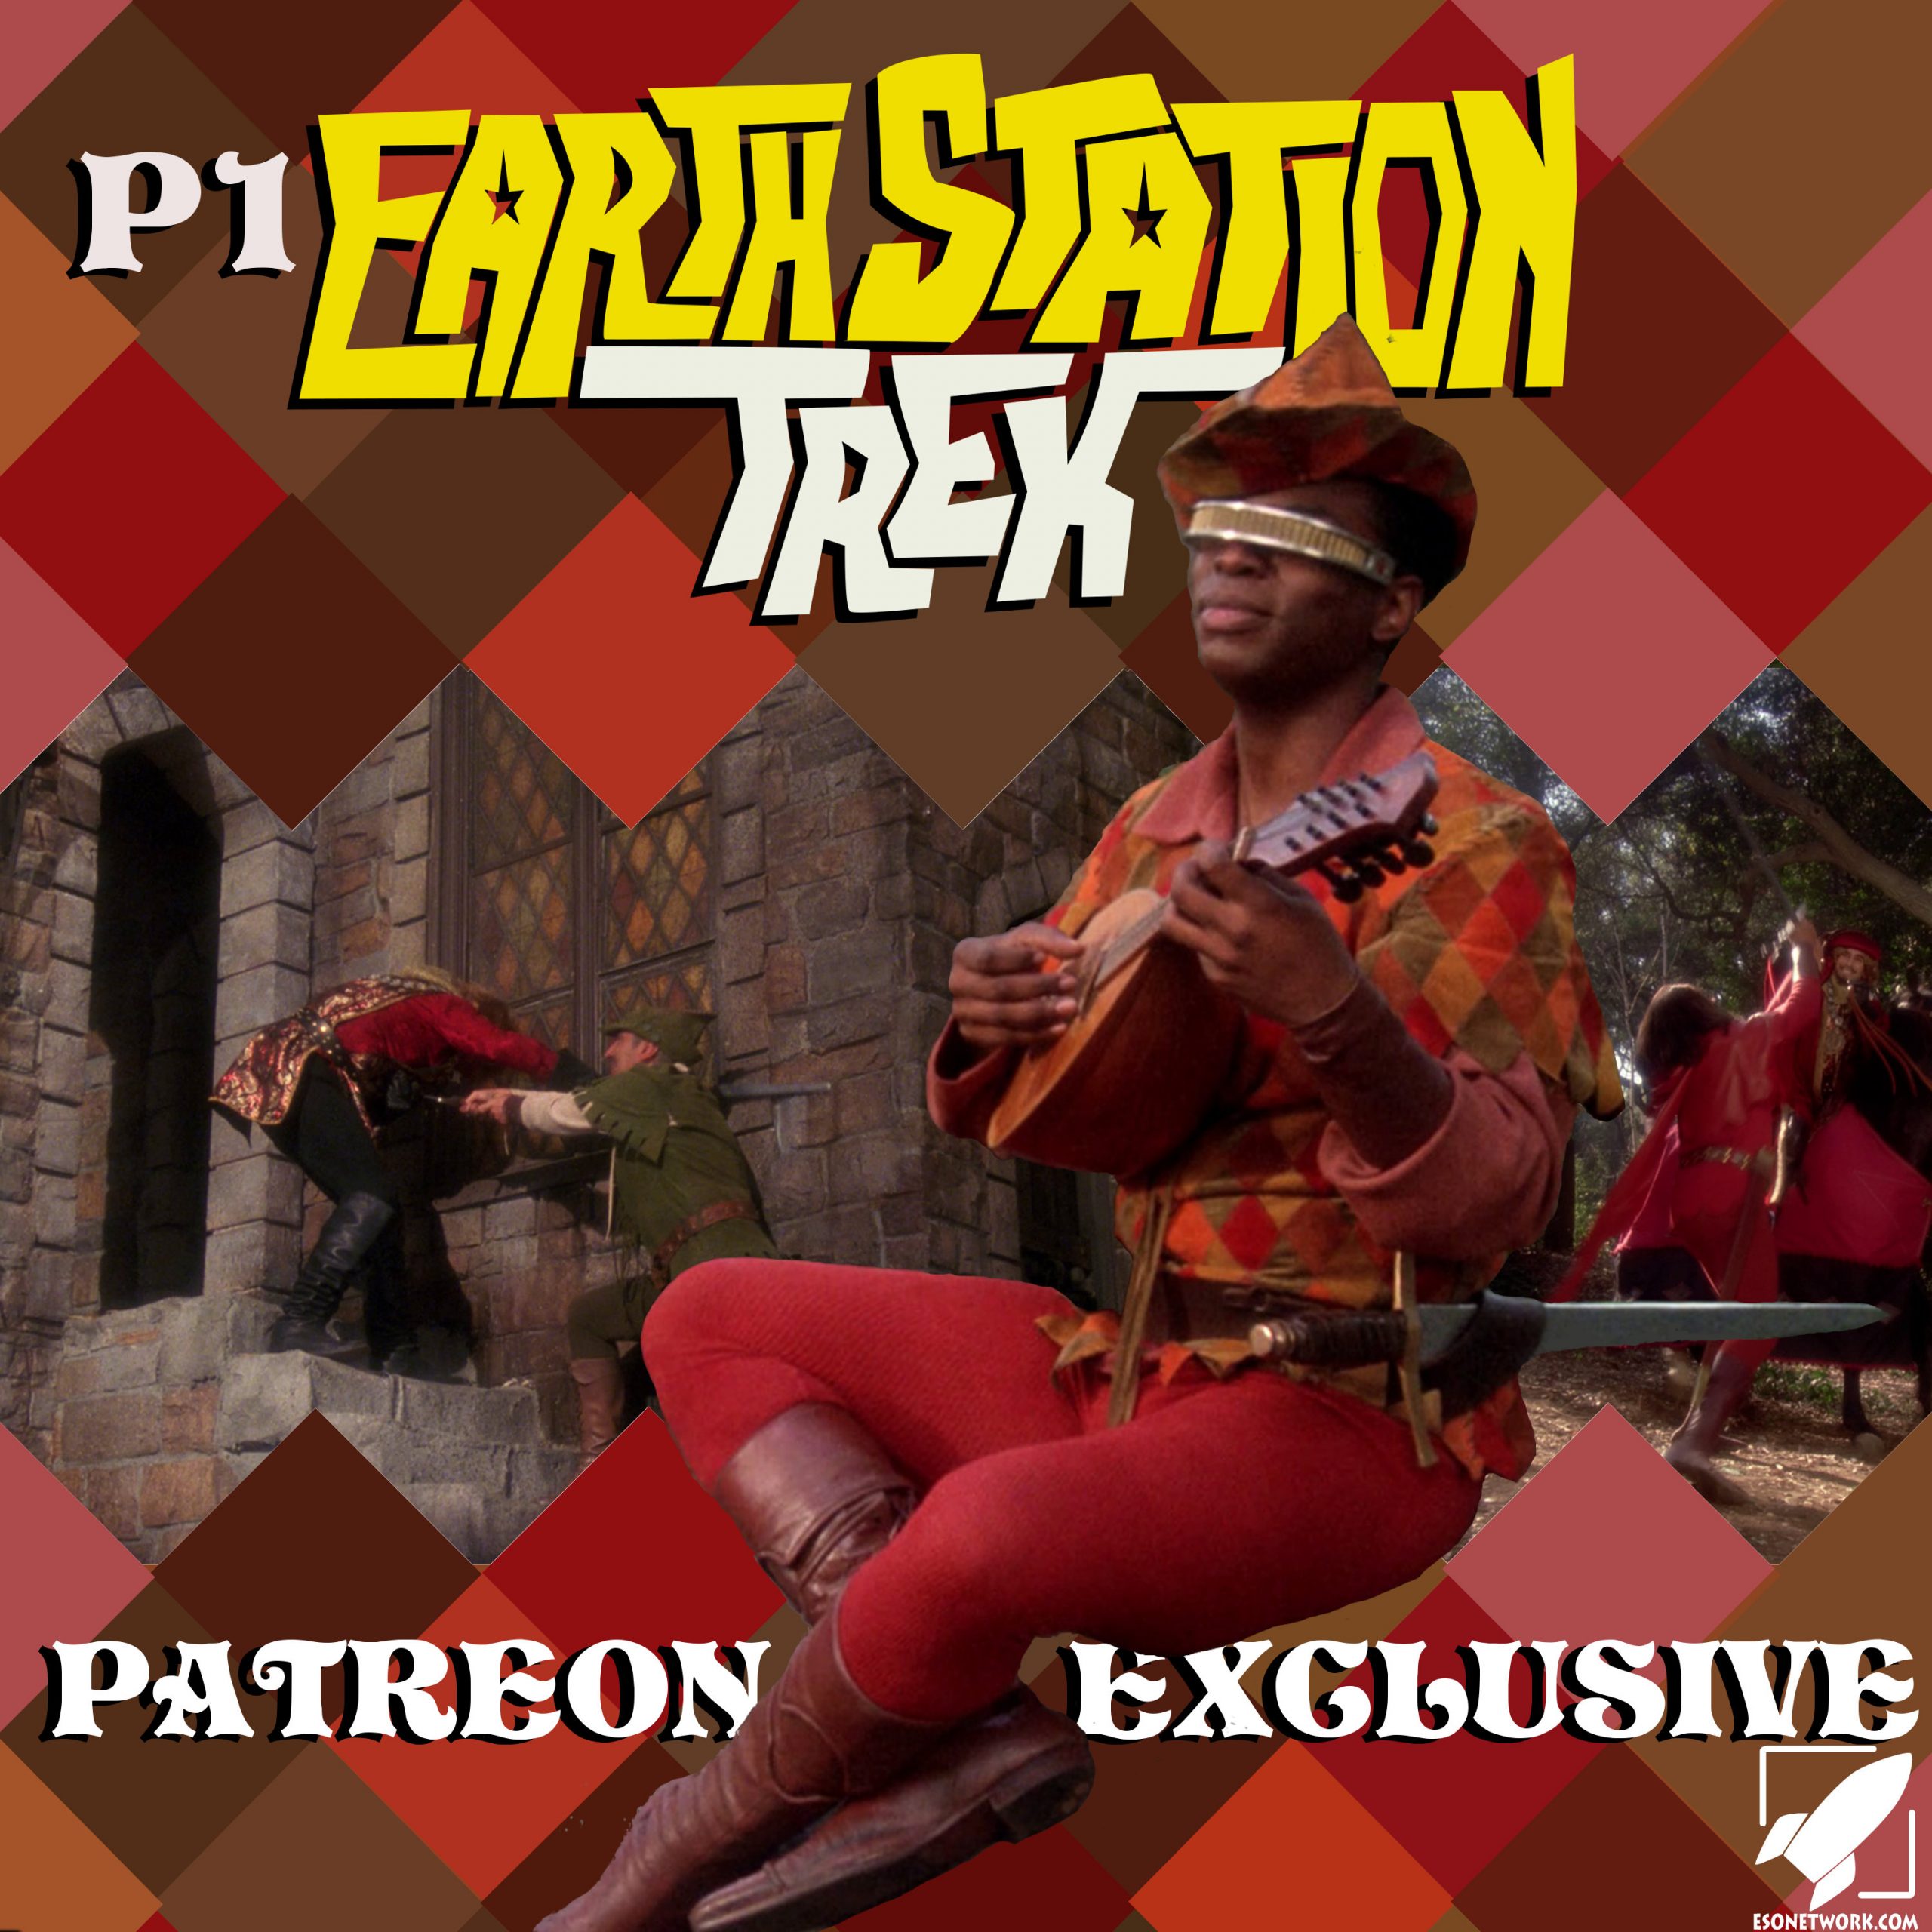 Earth Station Trek Patreon Exclusive